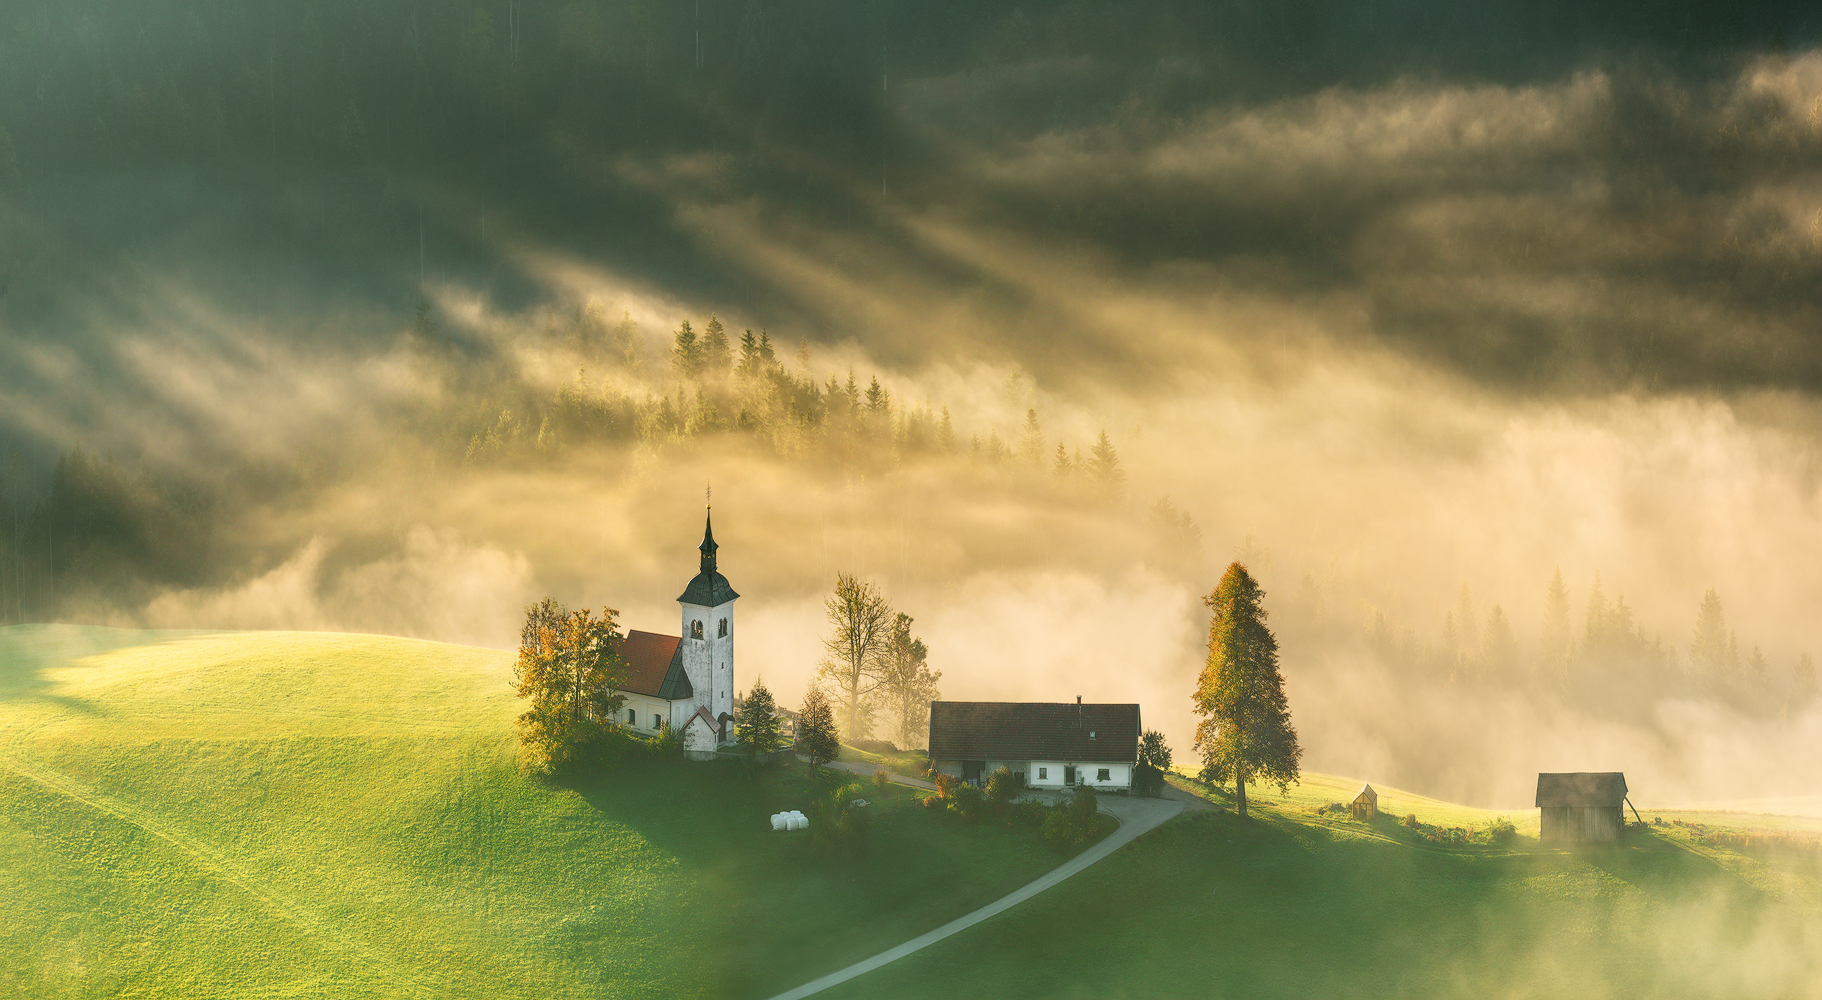 General 1822x1000 Krzysztof Browko landscape sun rays trees mist house top view road Slovenia hills idyllic